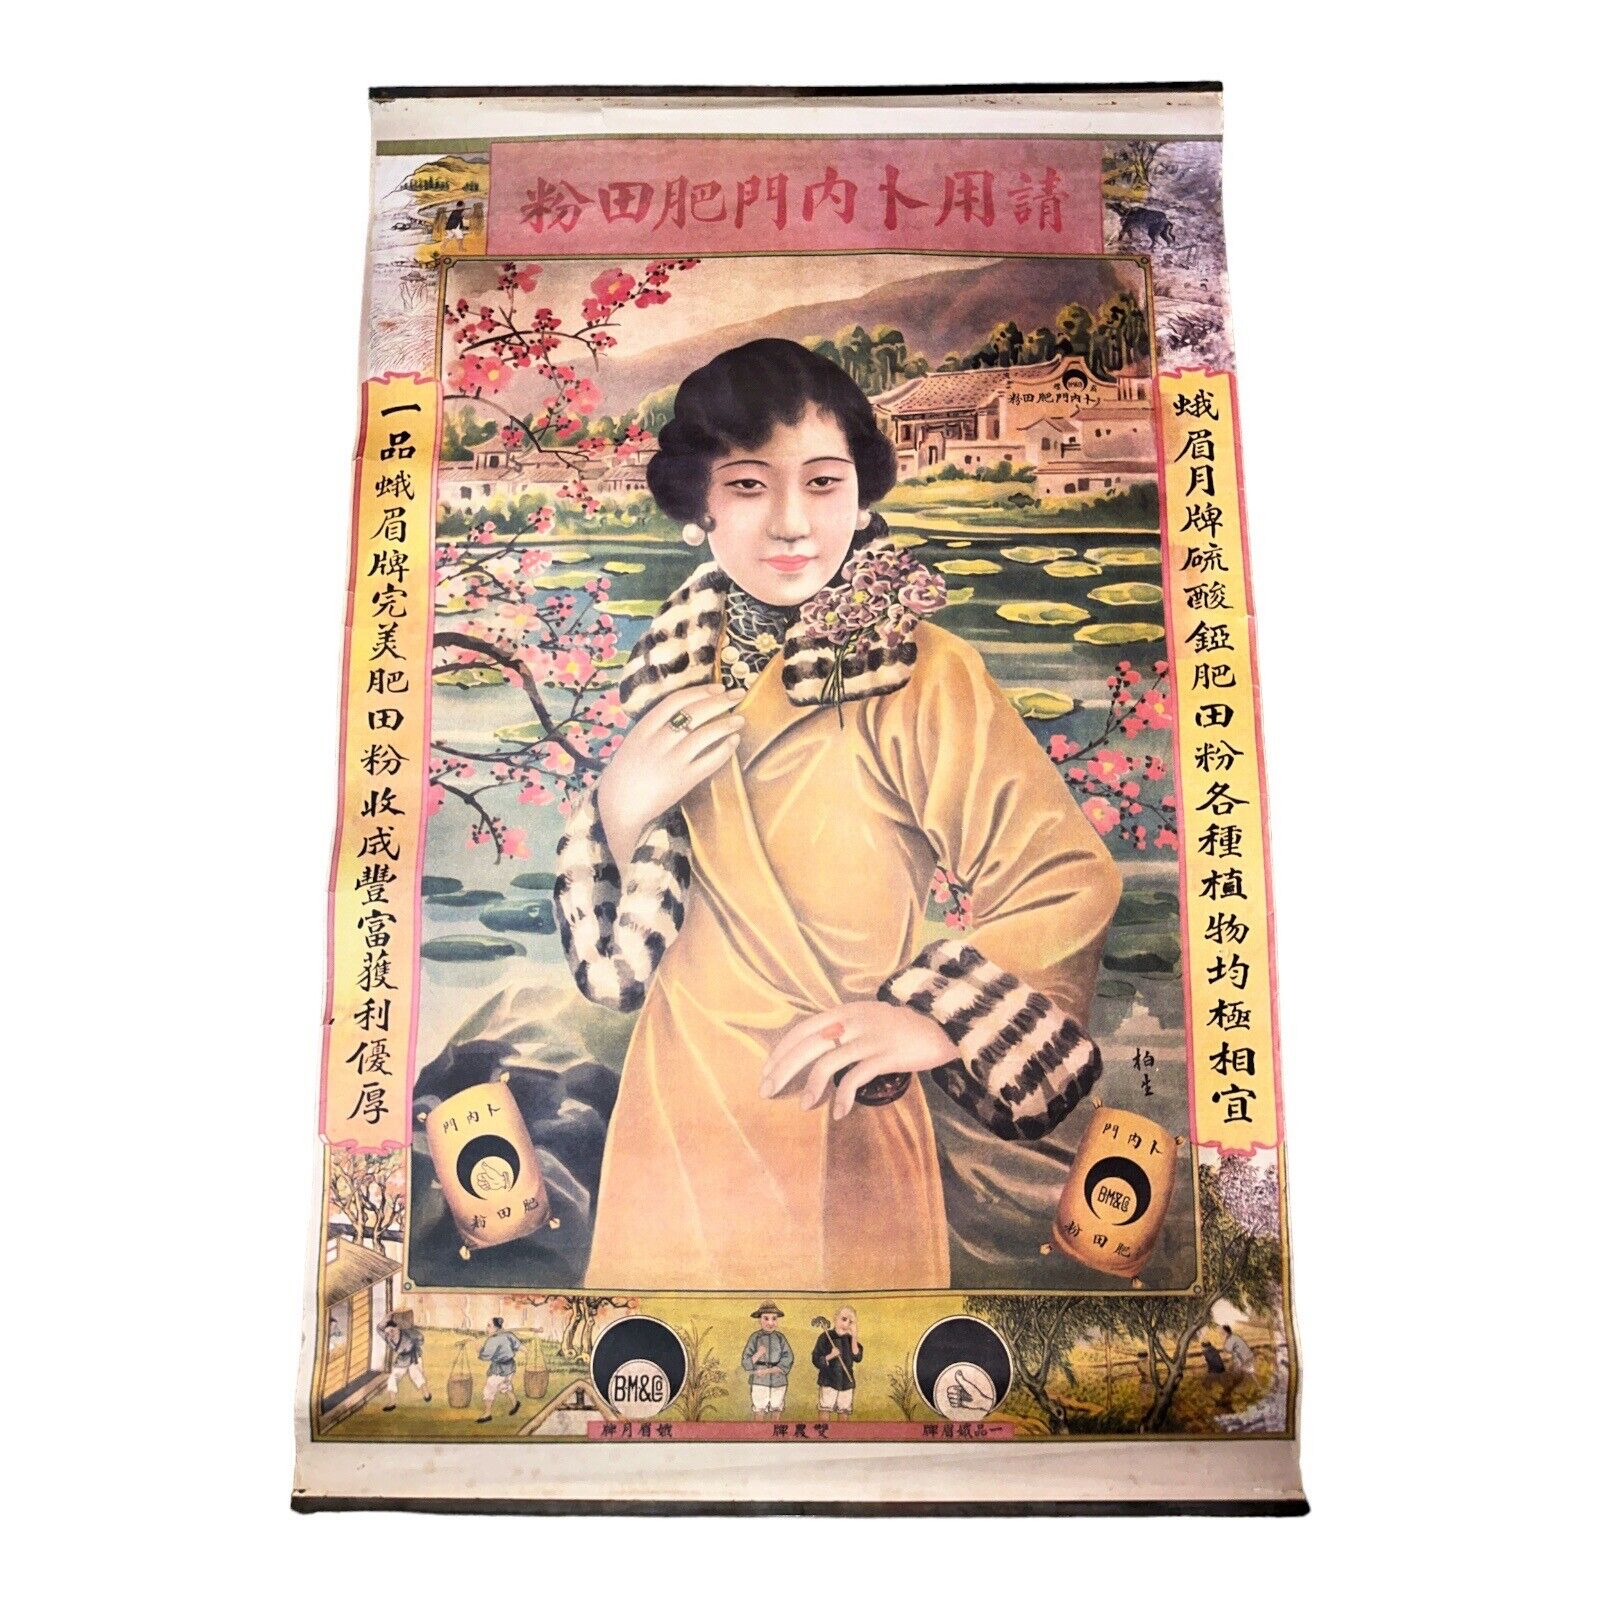 Vintage Authentic 1940s Chinese Fertilizer Advertisement Poster 30.5” x 19.5”